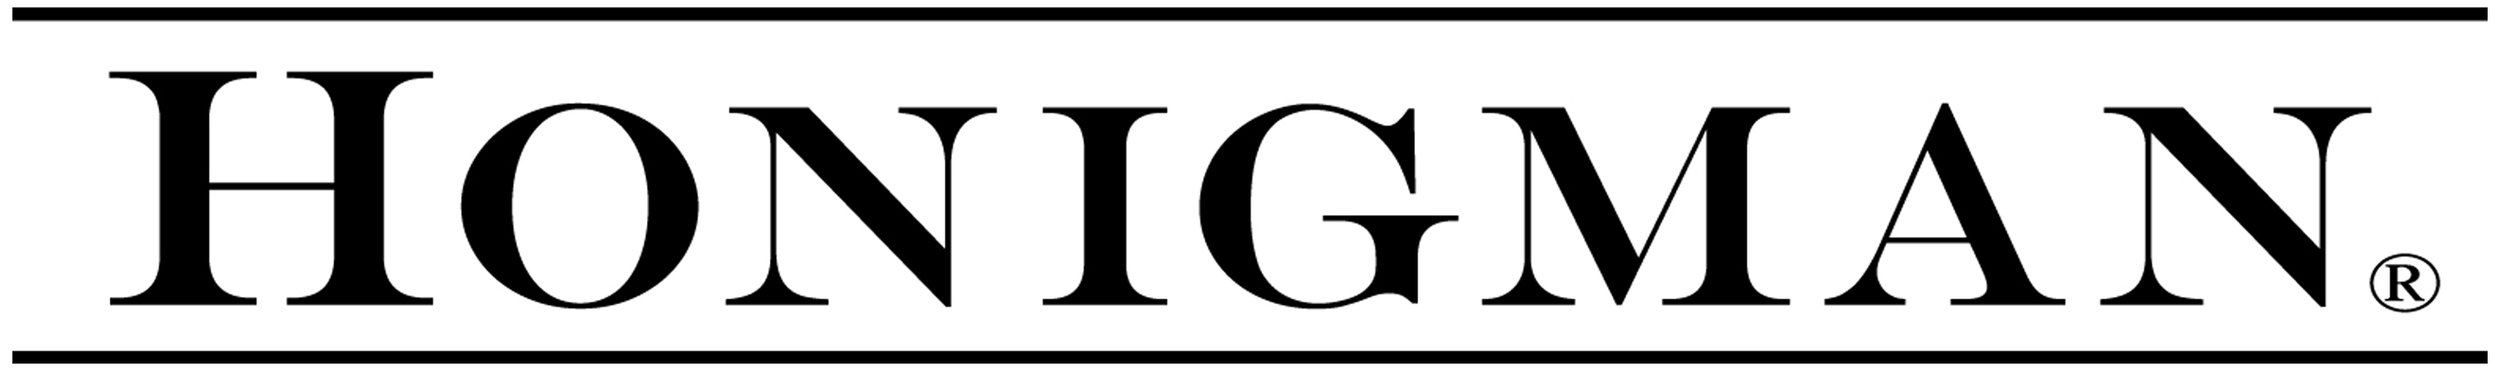 Honigman-Black-Logo-Reg-2012.jpg